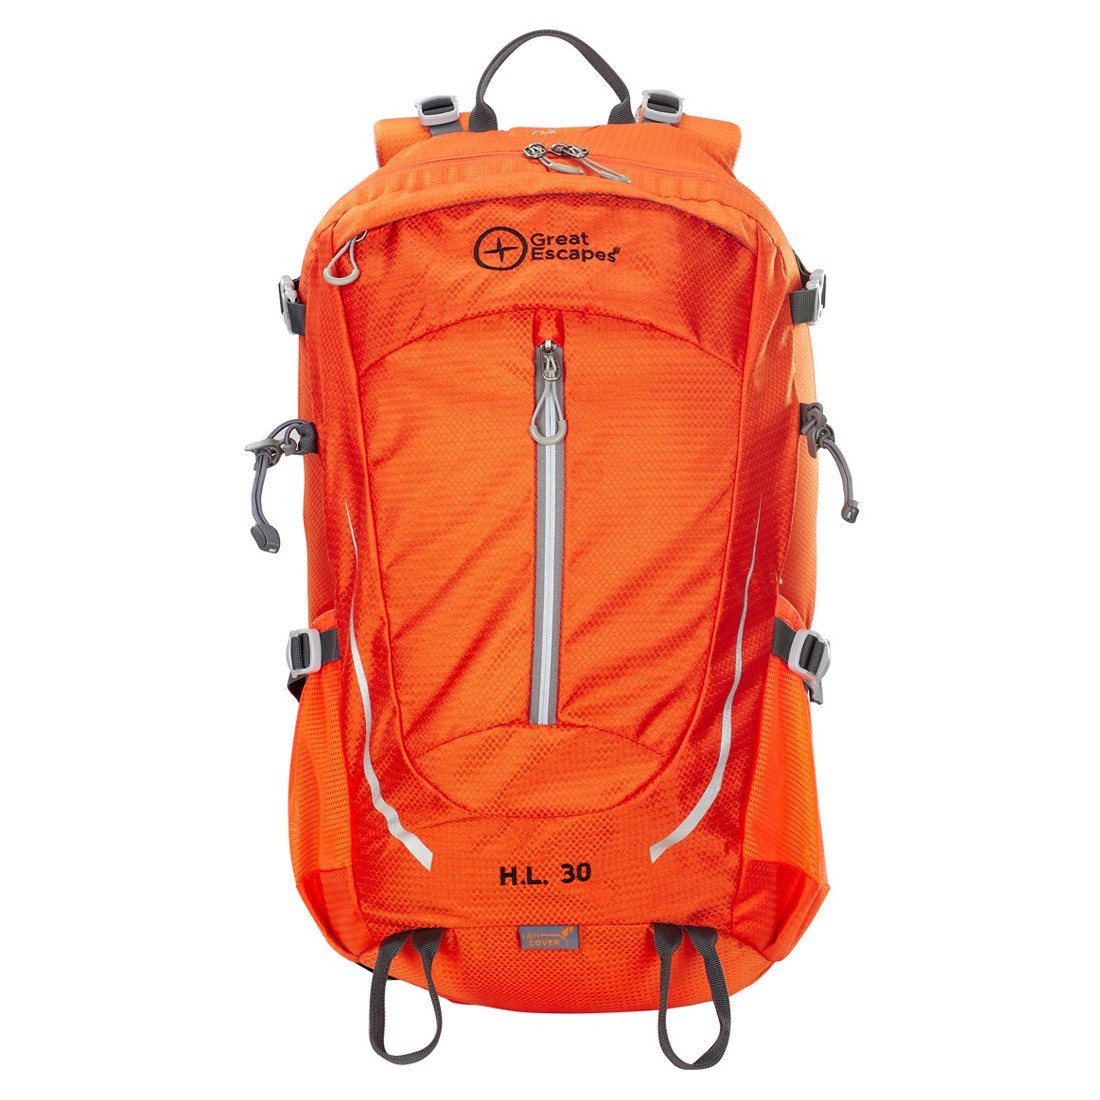 H.L. 30 - Trekking backpack 30 liters